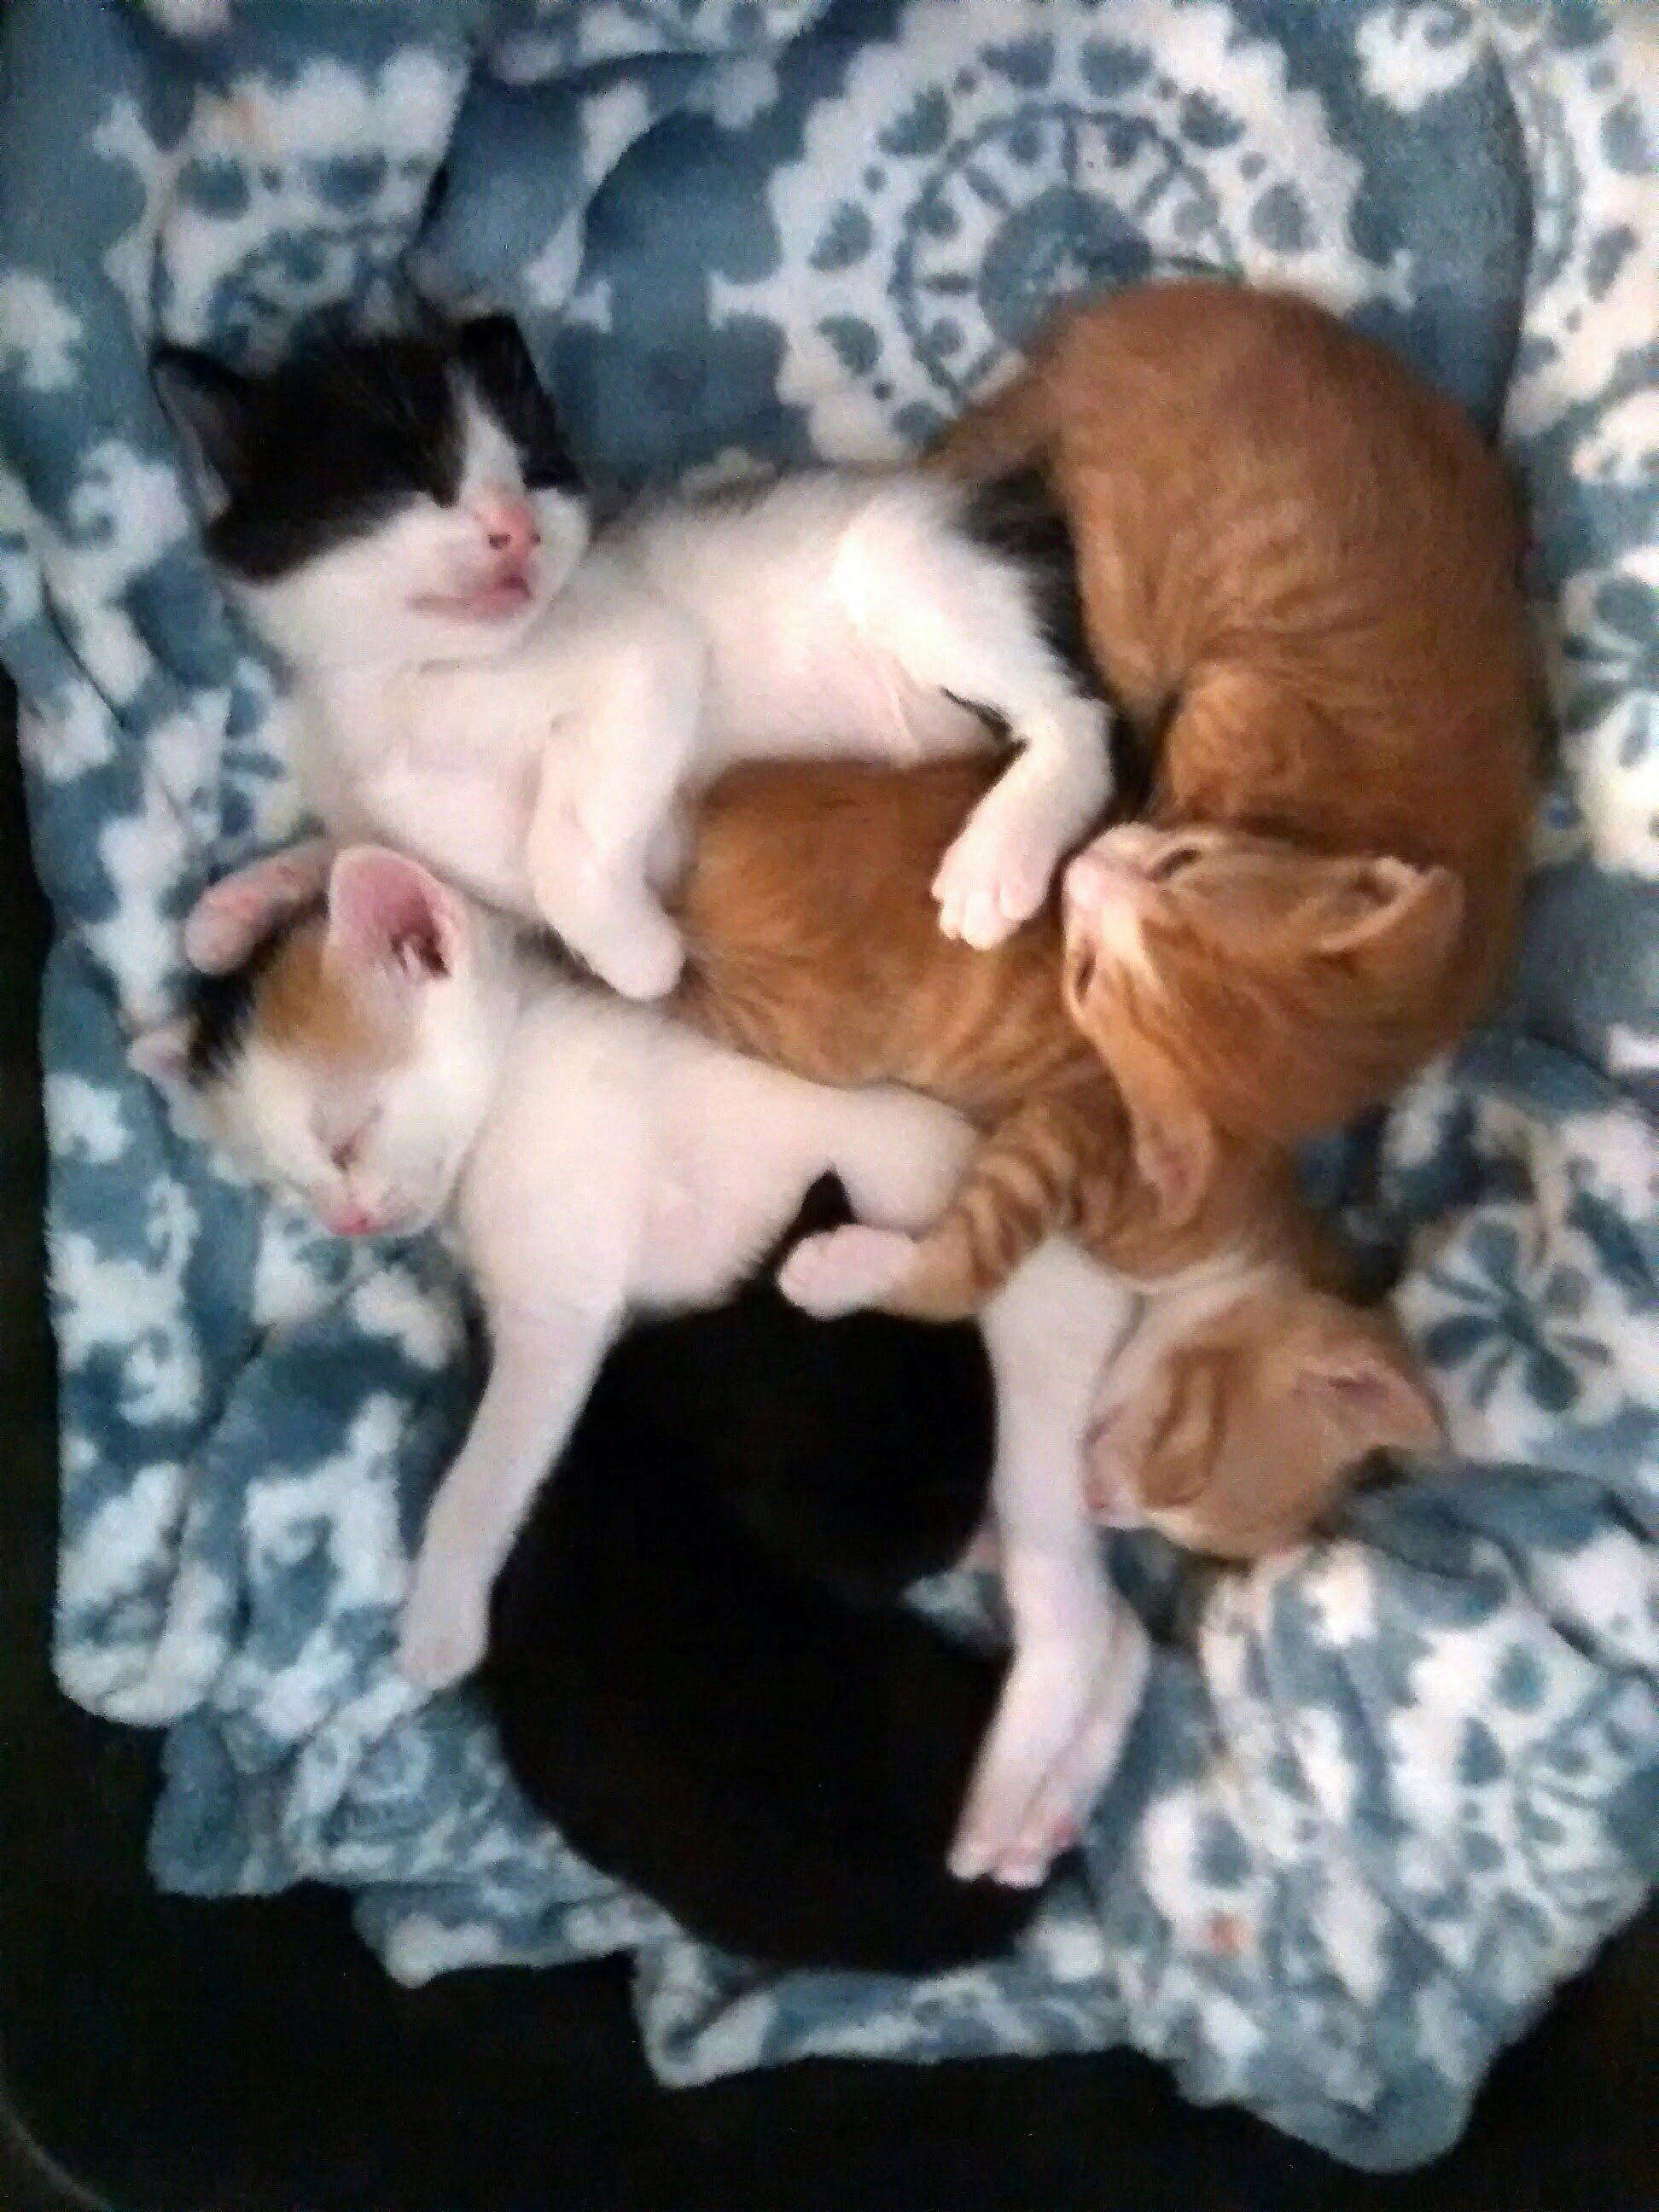 Kittens cuddling together